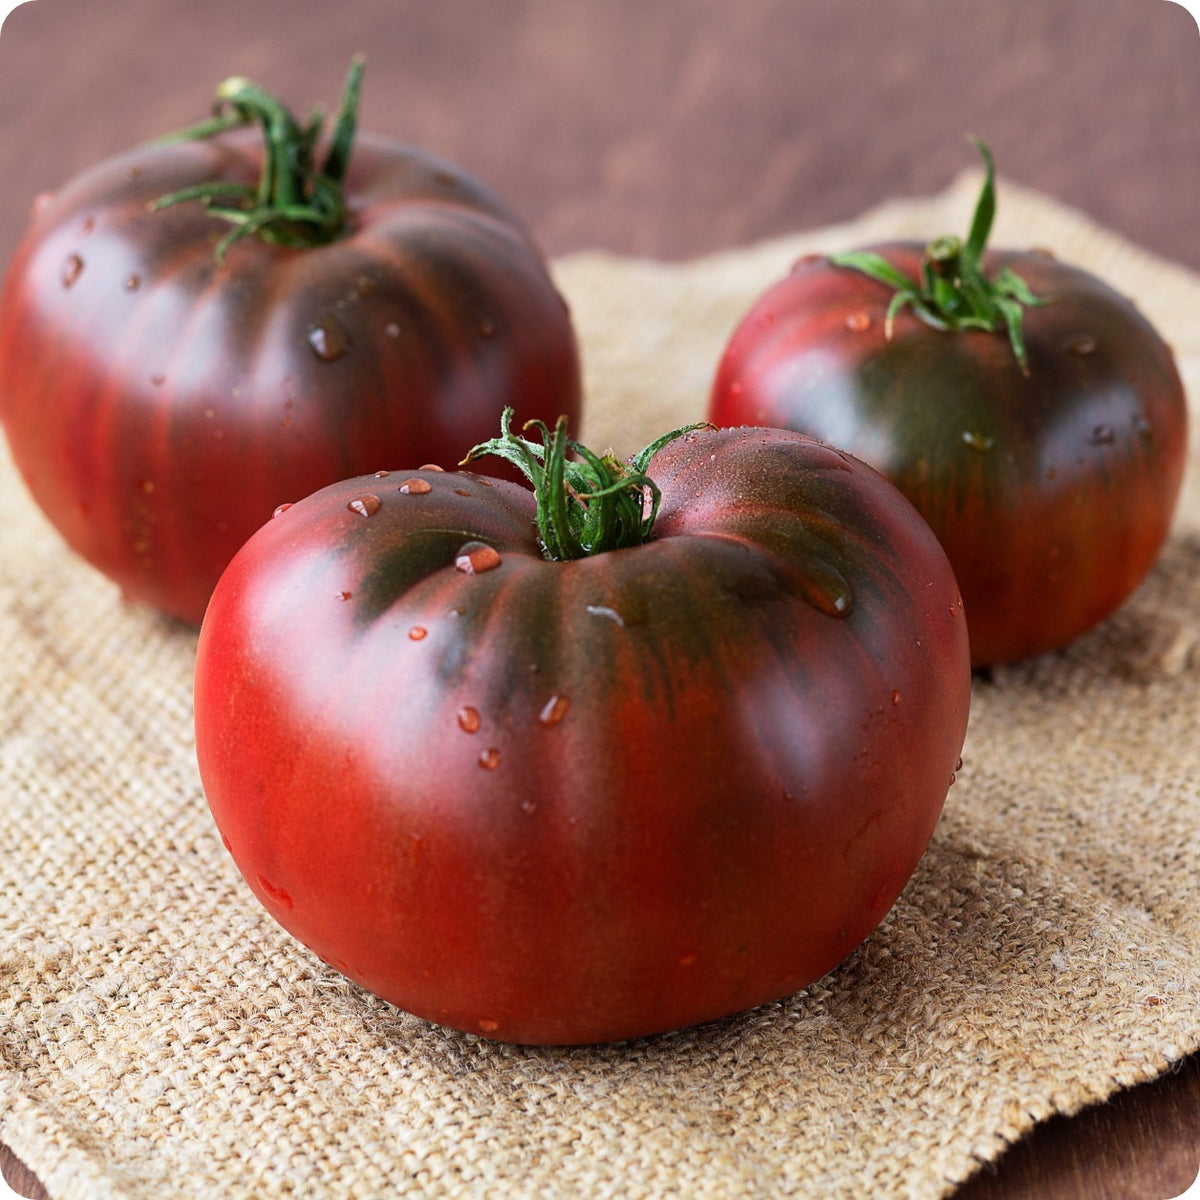 Brandywine Tomato Profile & Grow Guide - Tomato Bible